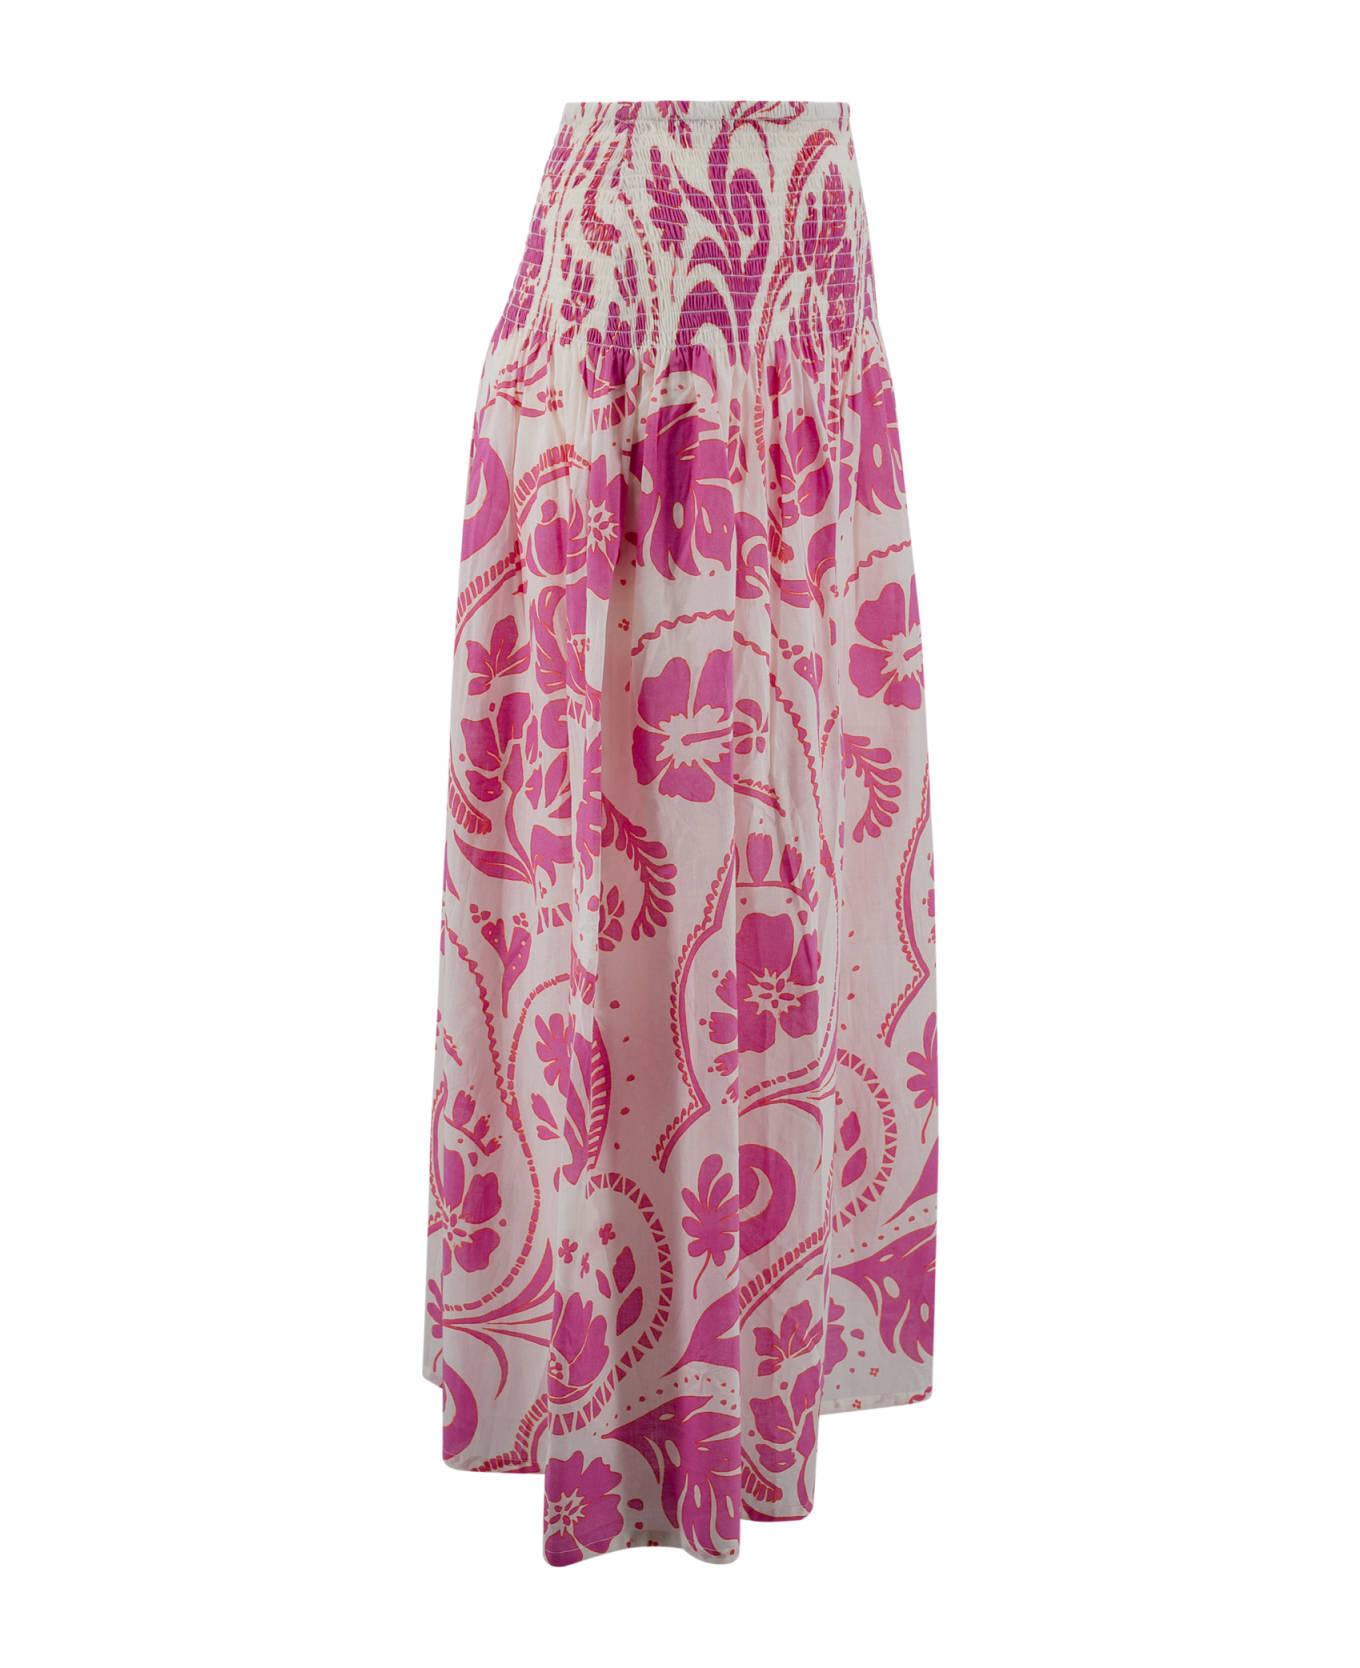 Surkana Long Skirt With Elastic Gathers At The Waist - Fuchsia スカート